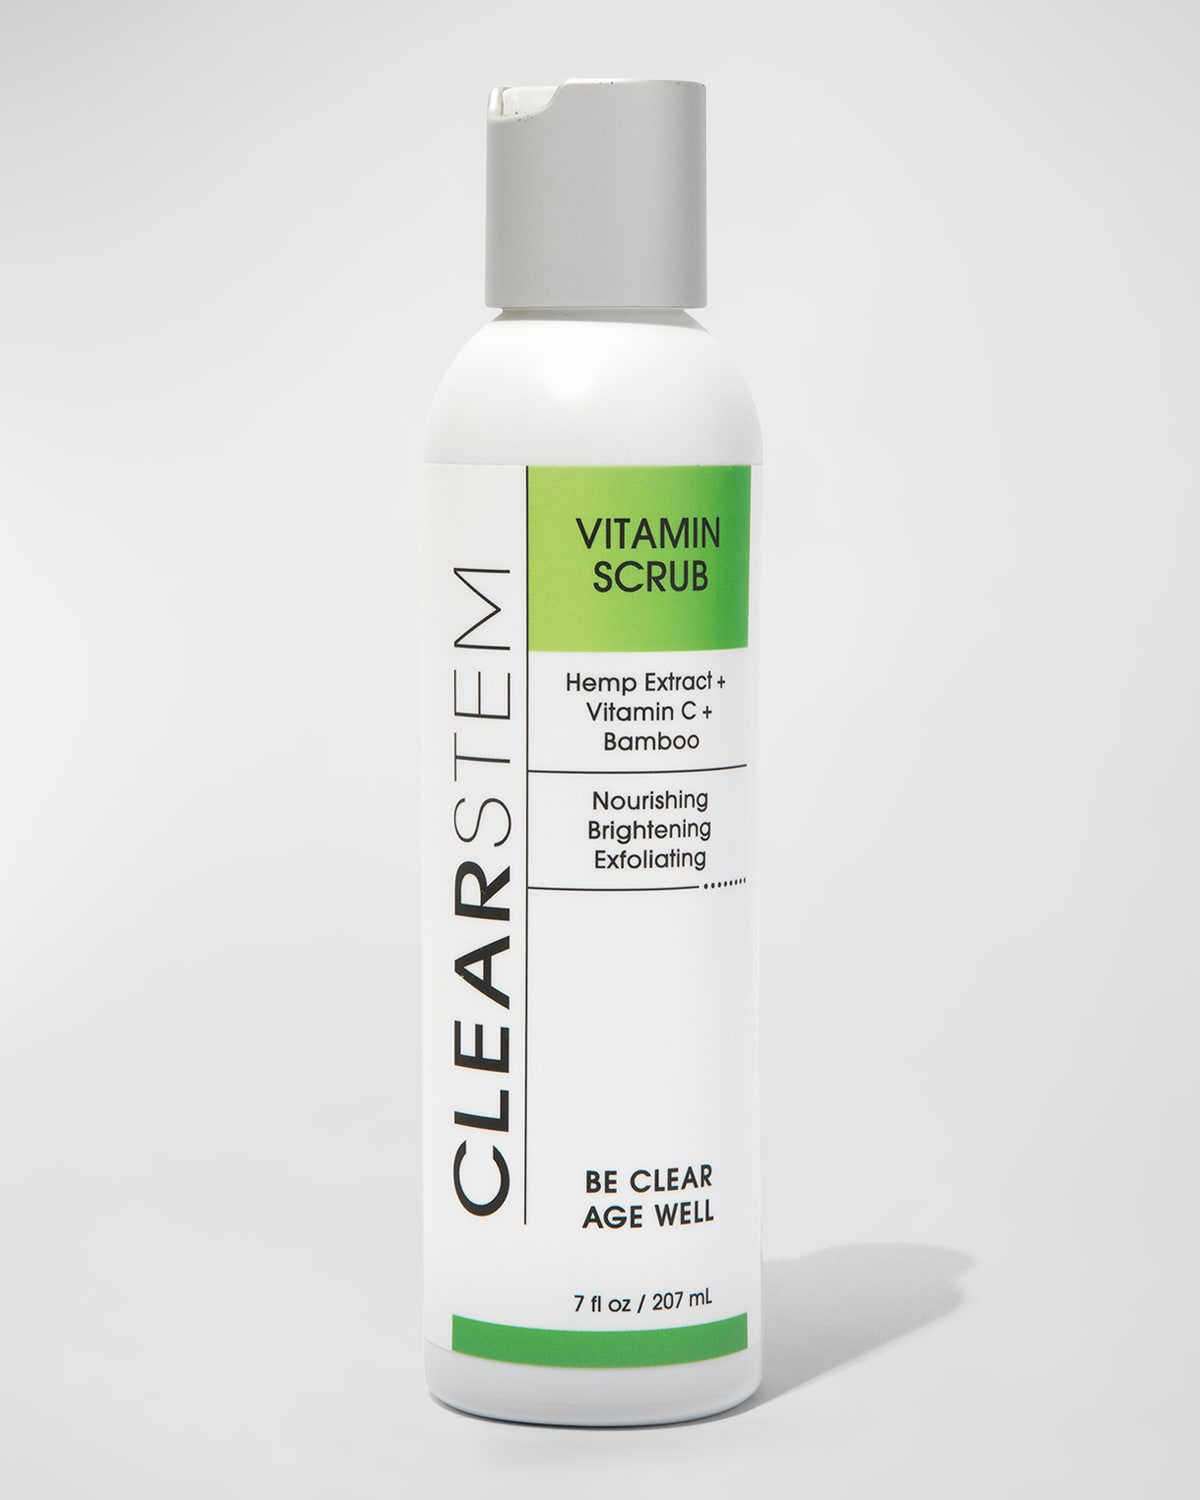 Shop Clearstem Skincare Vitaminscrub Facial Scrub With Bamboo, Hemp, And Vitamin C - 7 Oz.